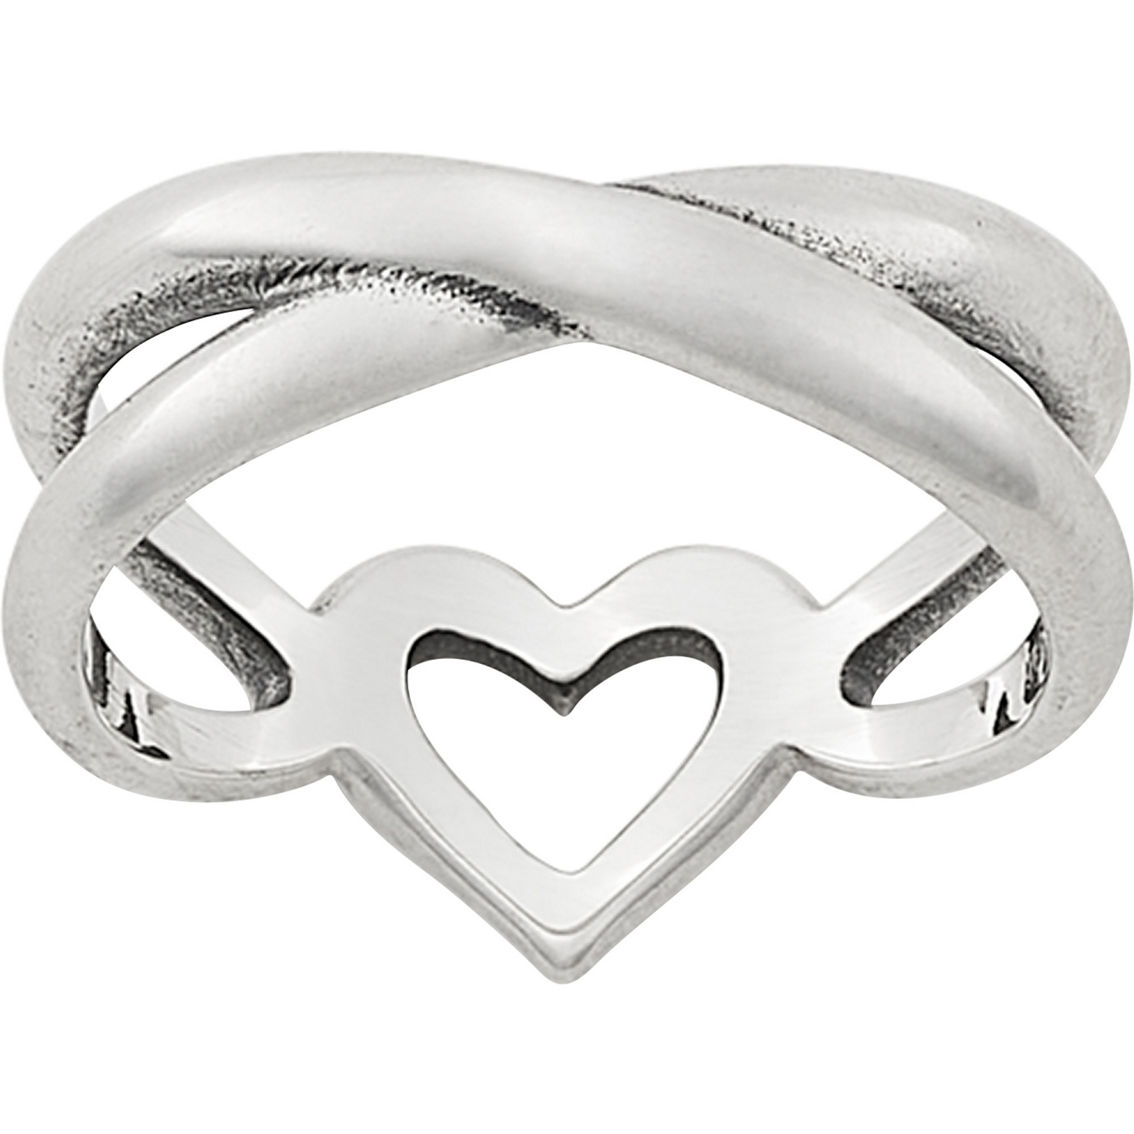 James Avery Infinite Love Ring - Image 2 of 2